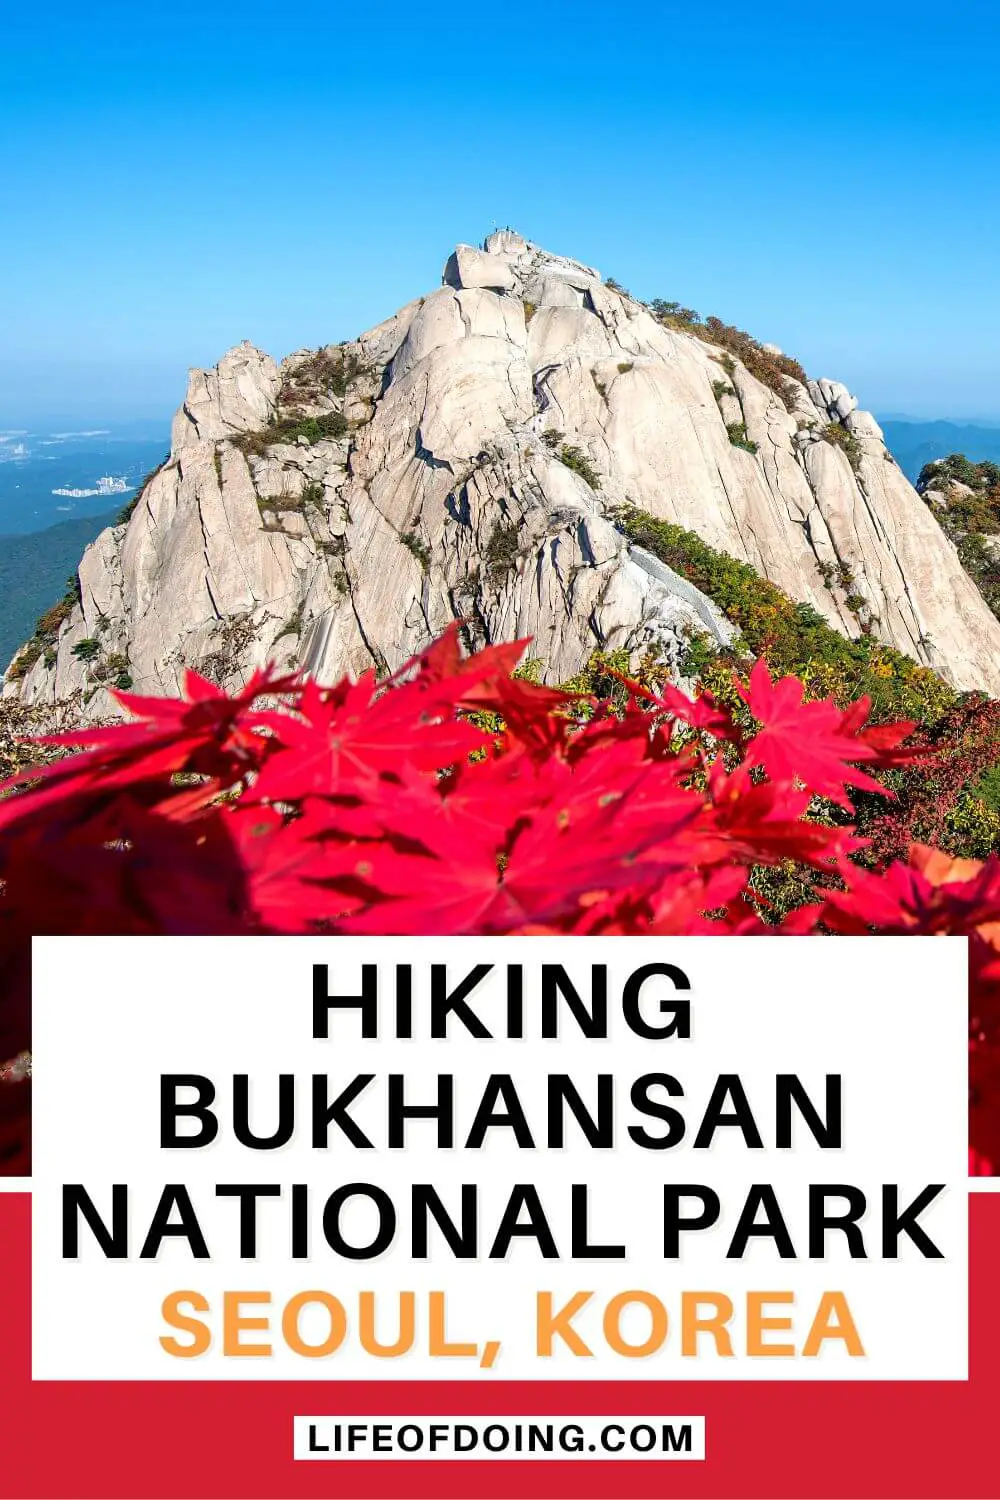 Red leaves in front of the peak of Baegundae at Bukhansan National Park in Seoul